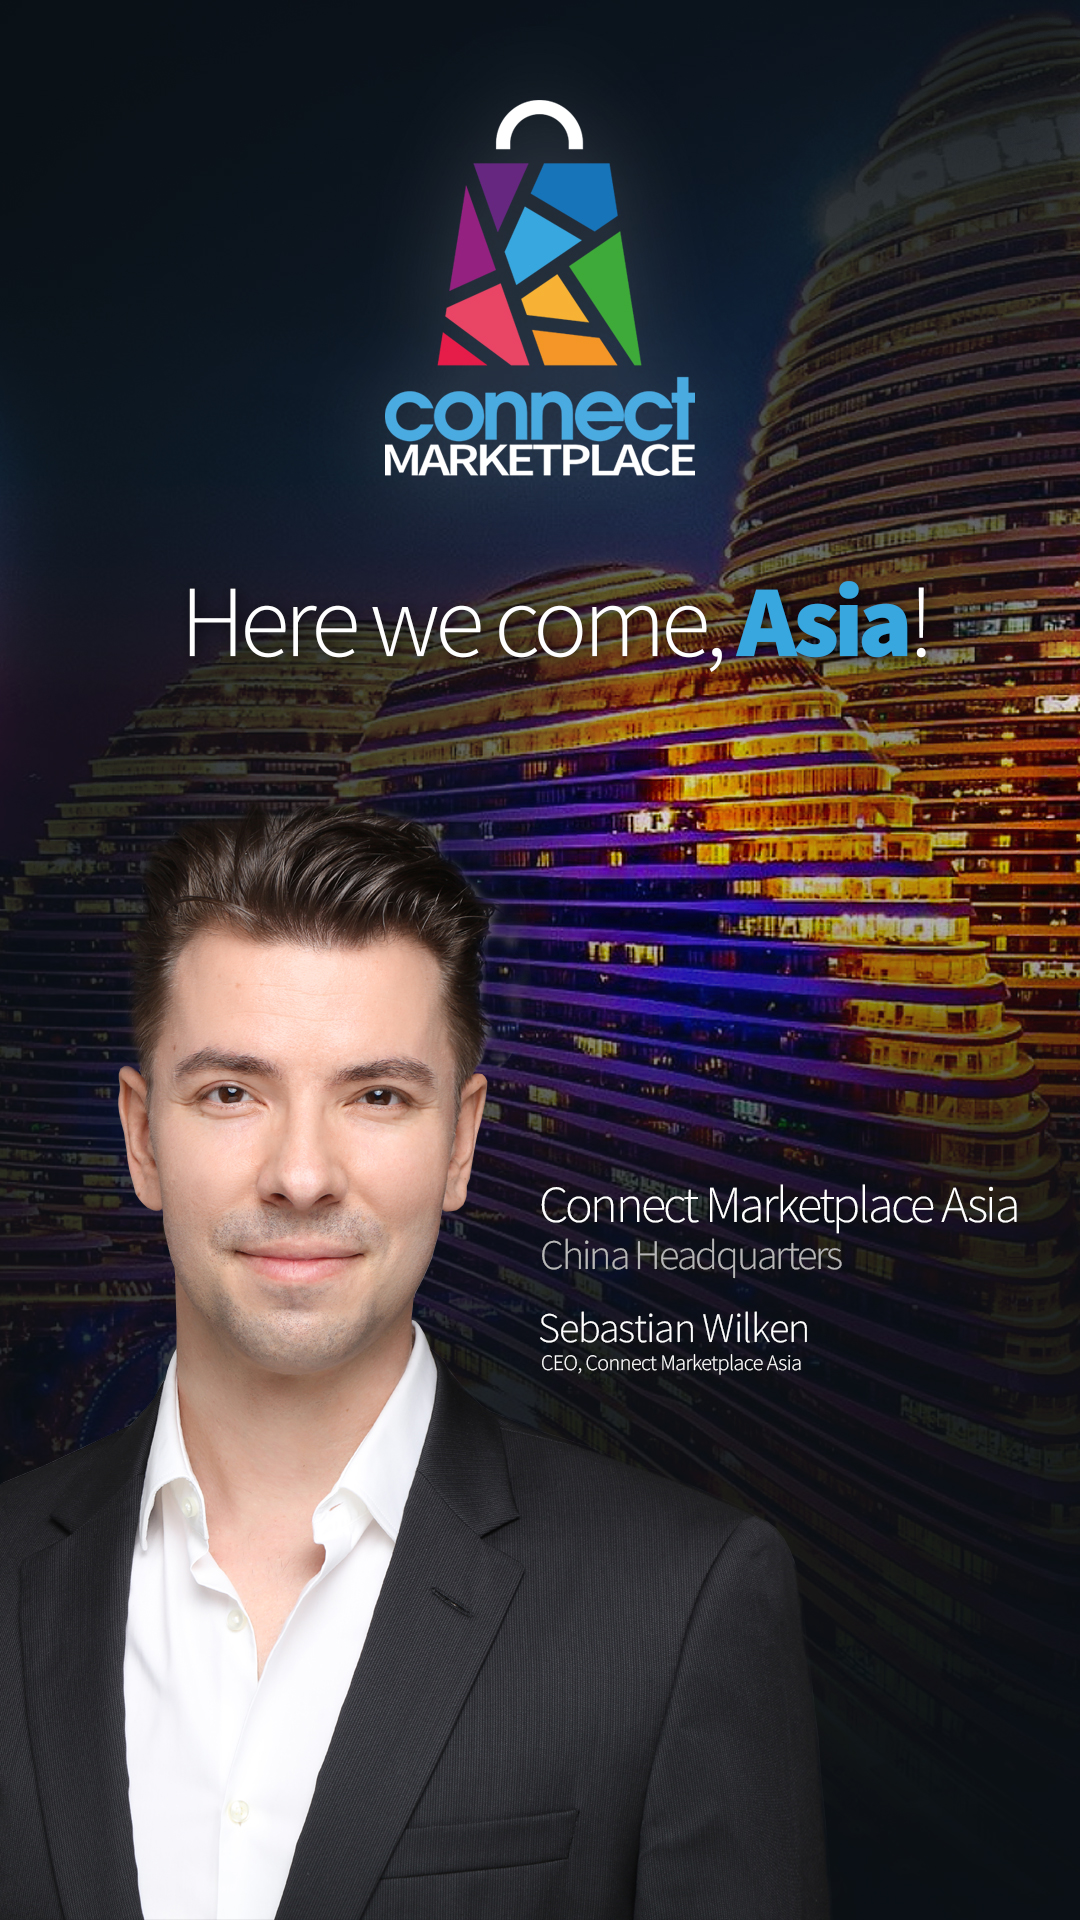 Sebastian Wilken - Connect Marketplace Asia